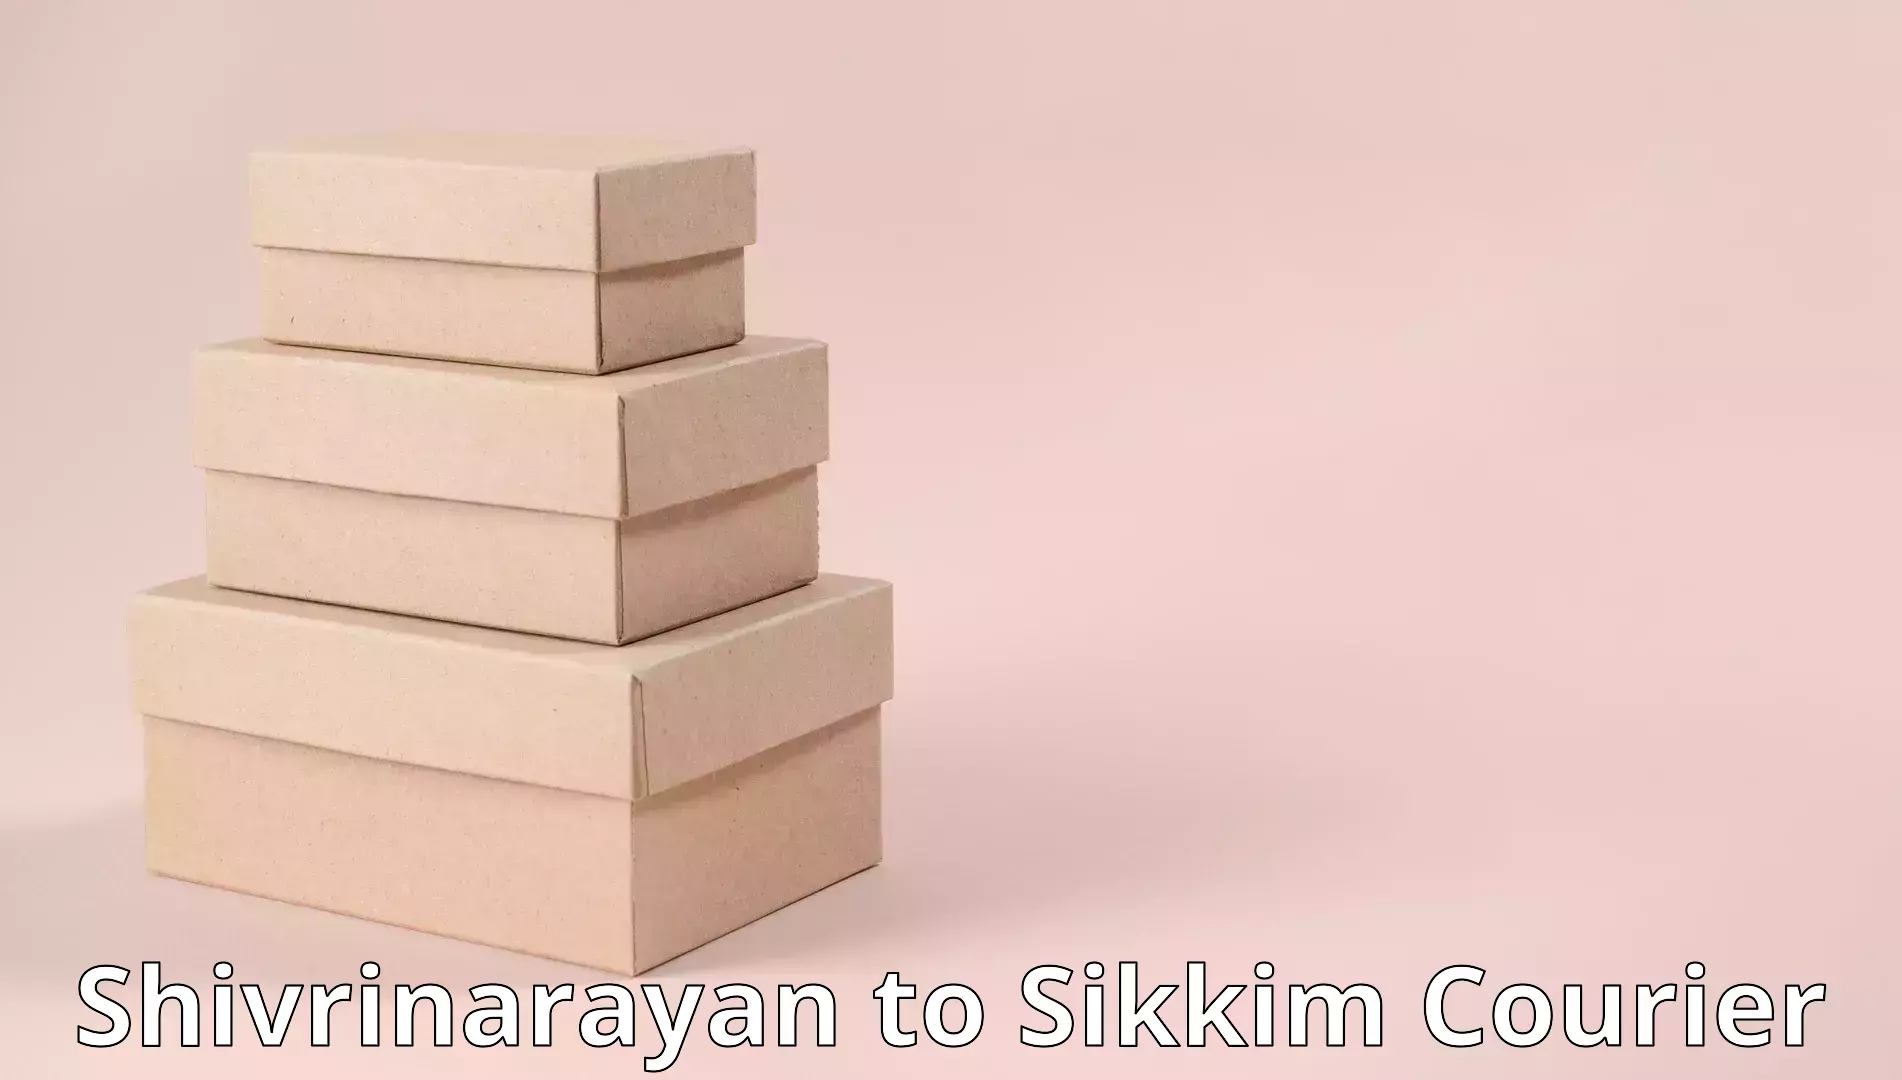 Reliable movers Shivrinarayan to Sikkim